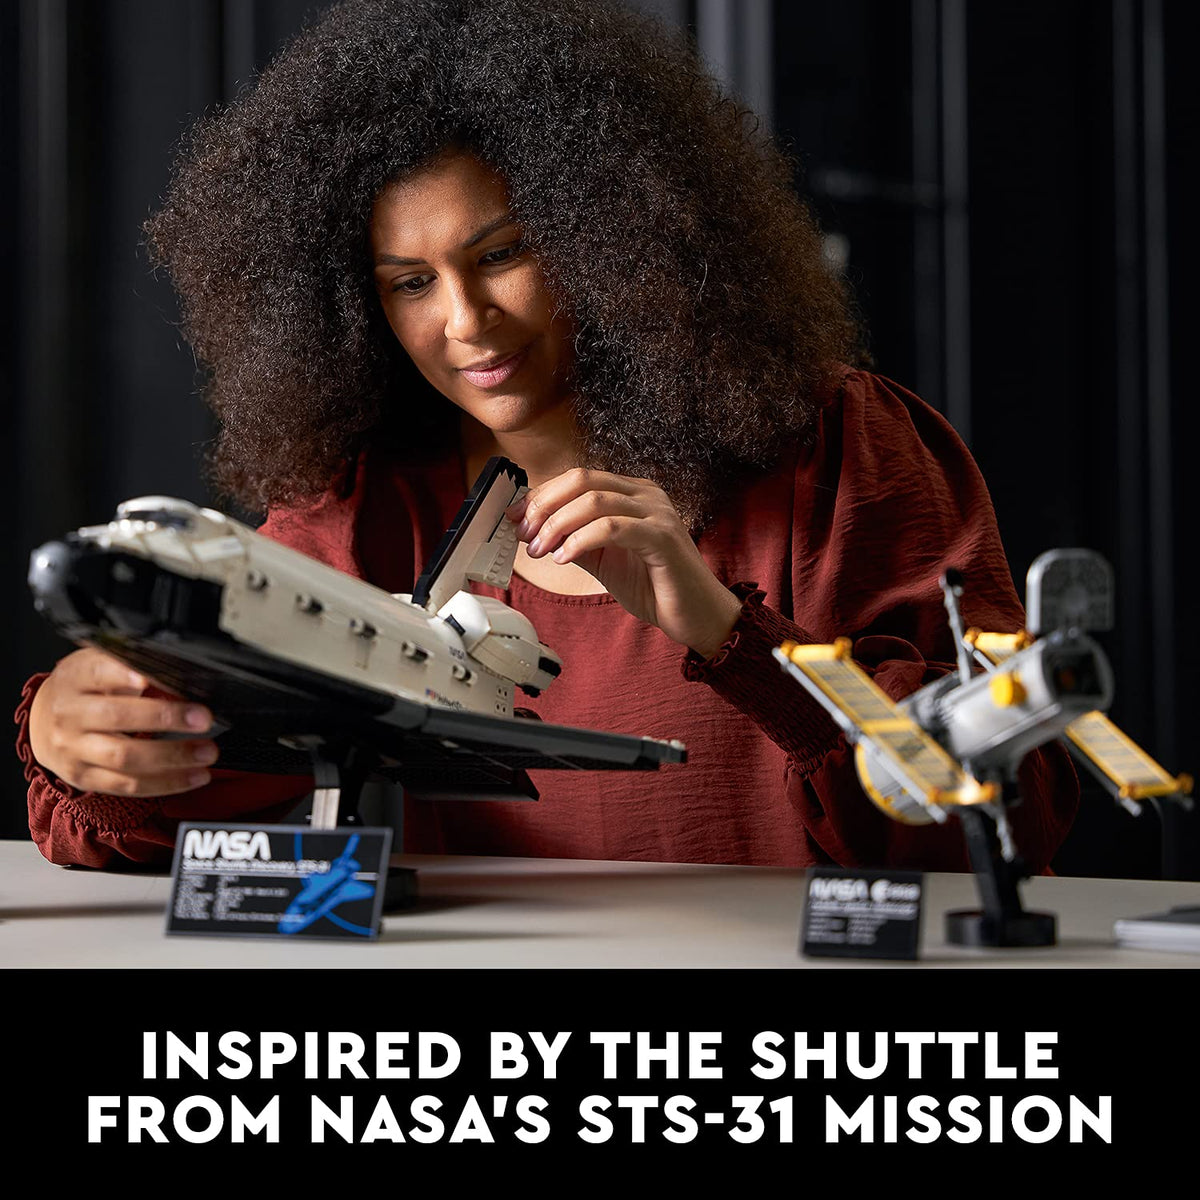 LEGO NASA Bundle: 10283 Space Shuttle Discovery & 21309 Apollo Saturn V -  NISB